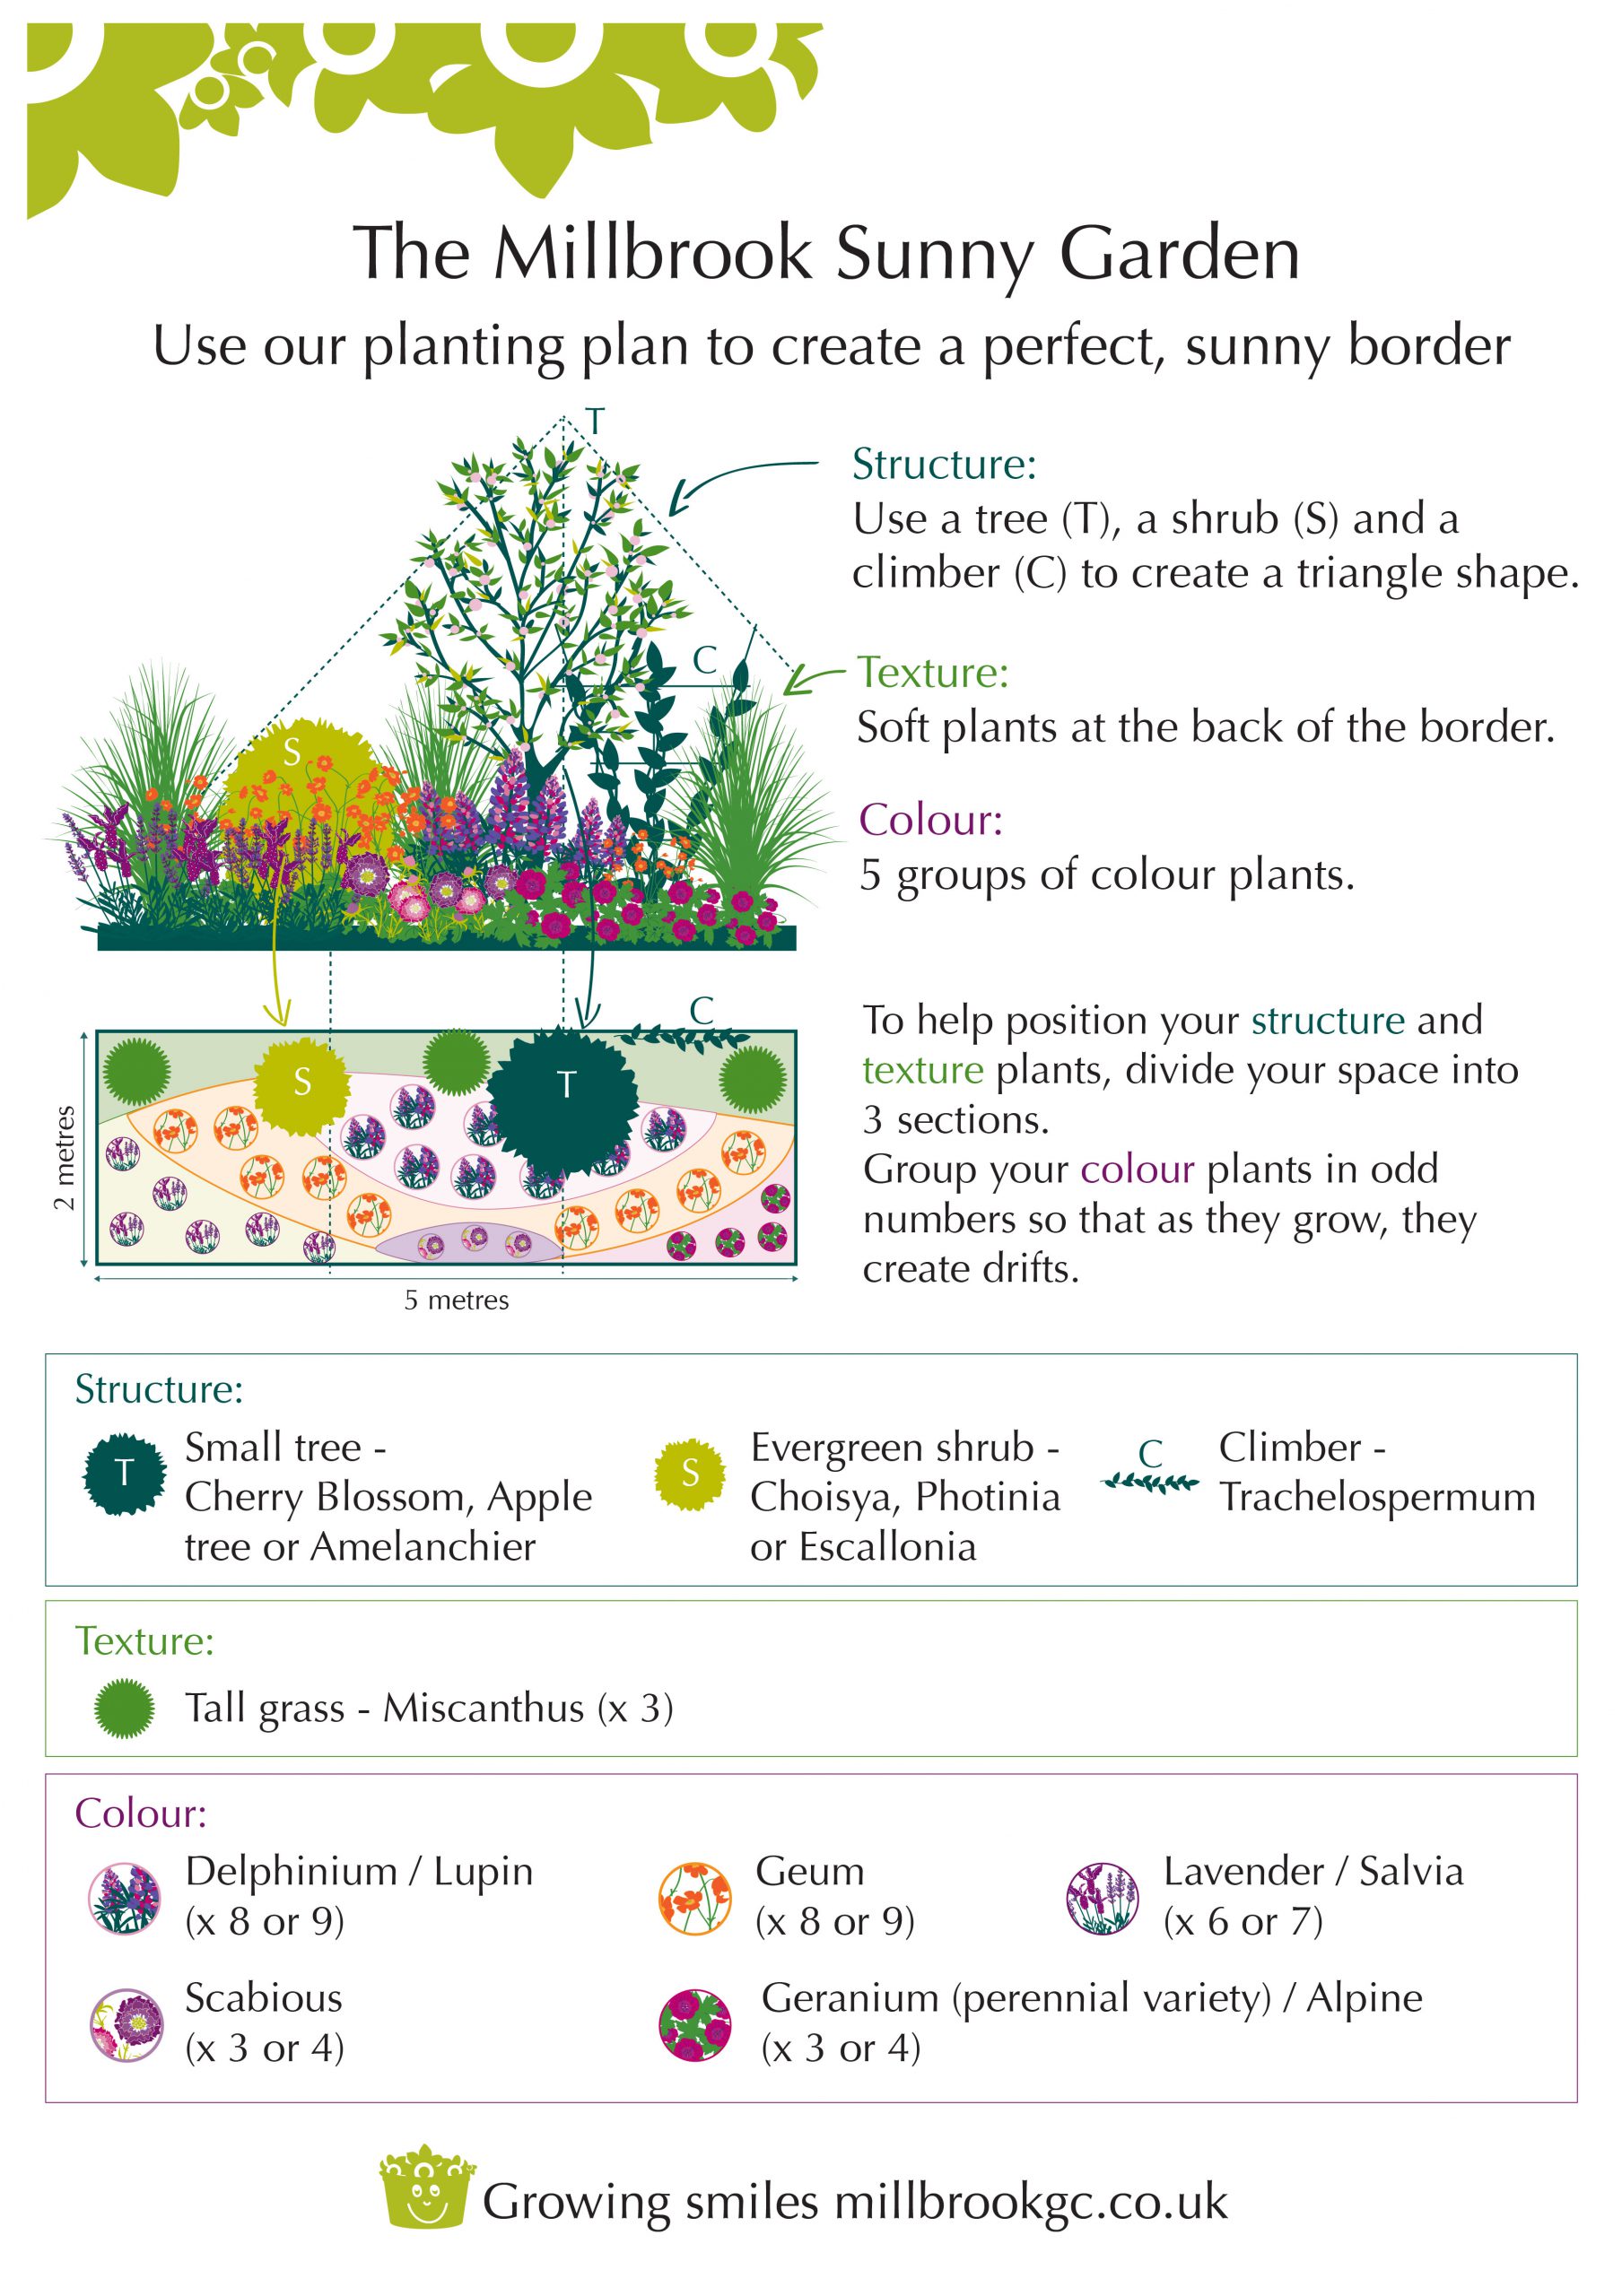 How to Plant a Sunny Border - Millbrook Garden Centre